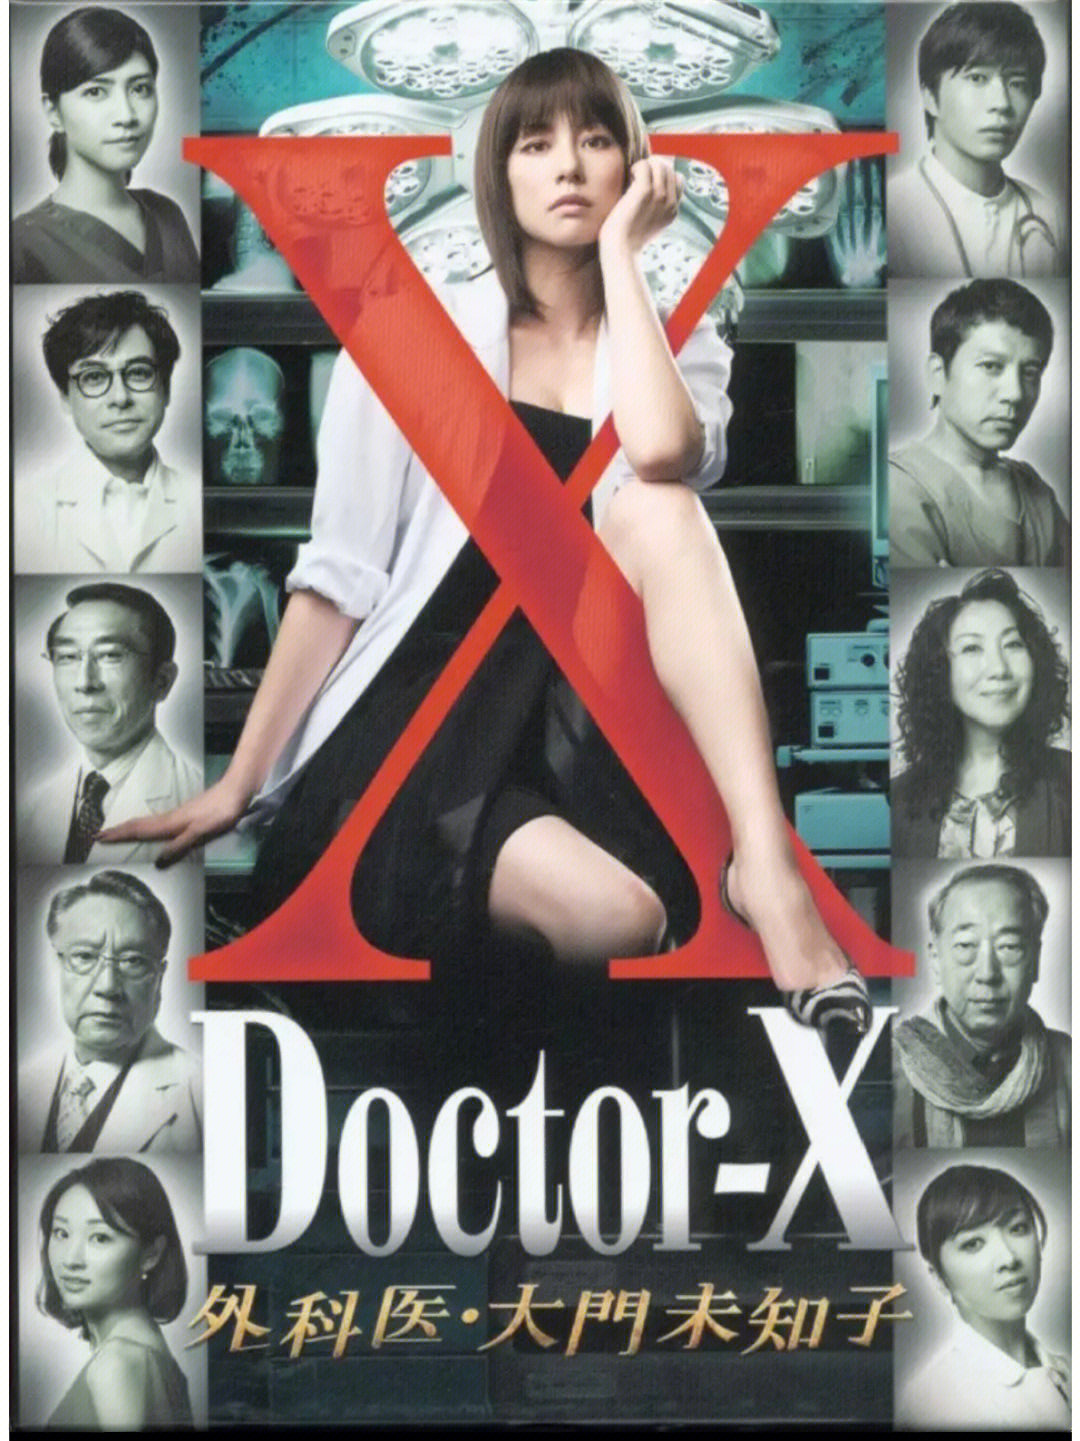 doctorx第6季图片